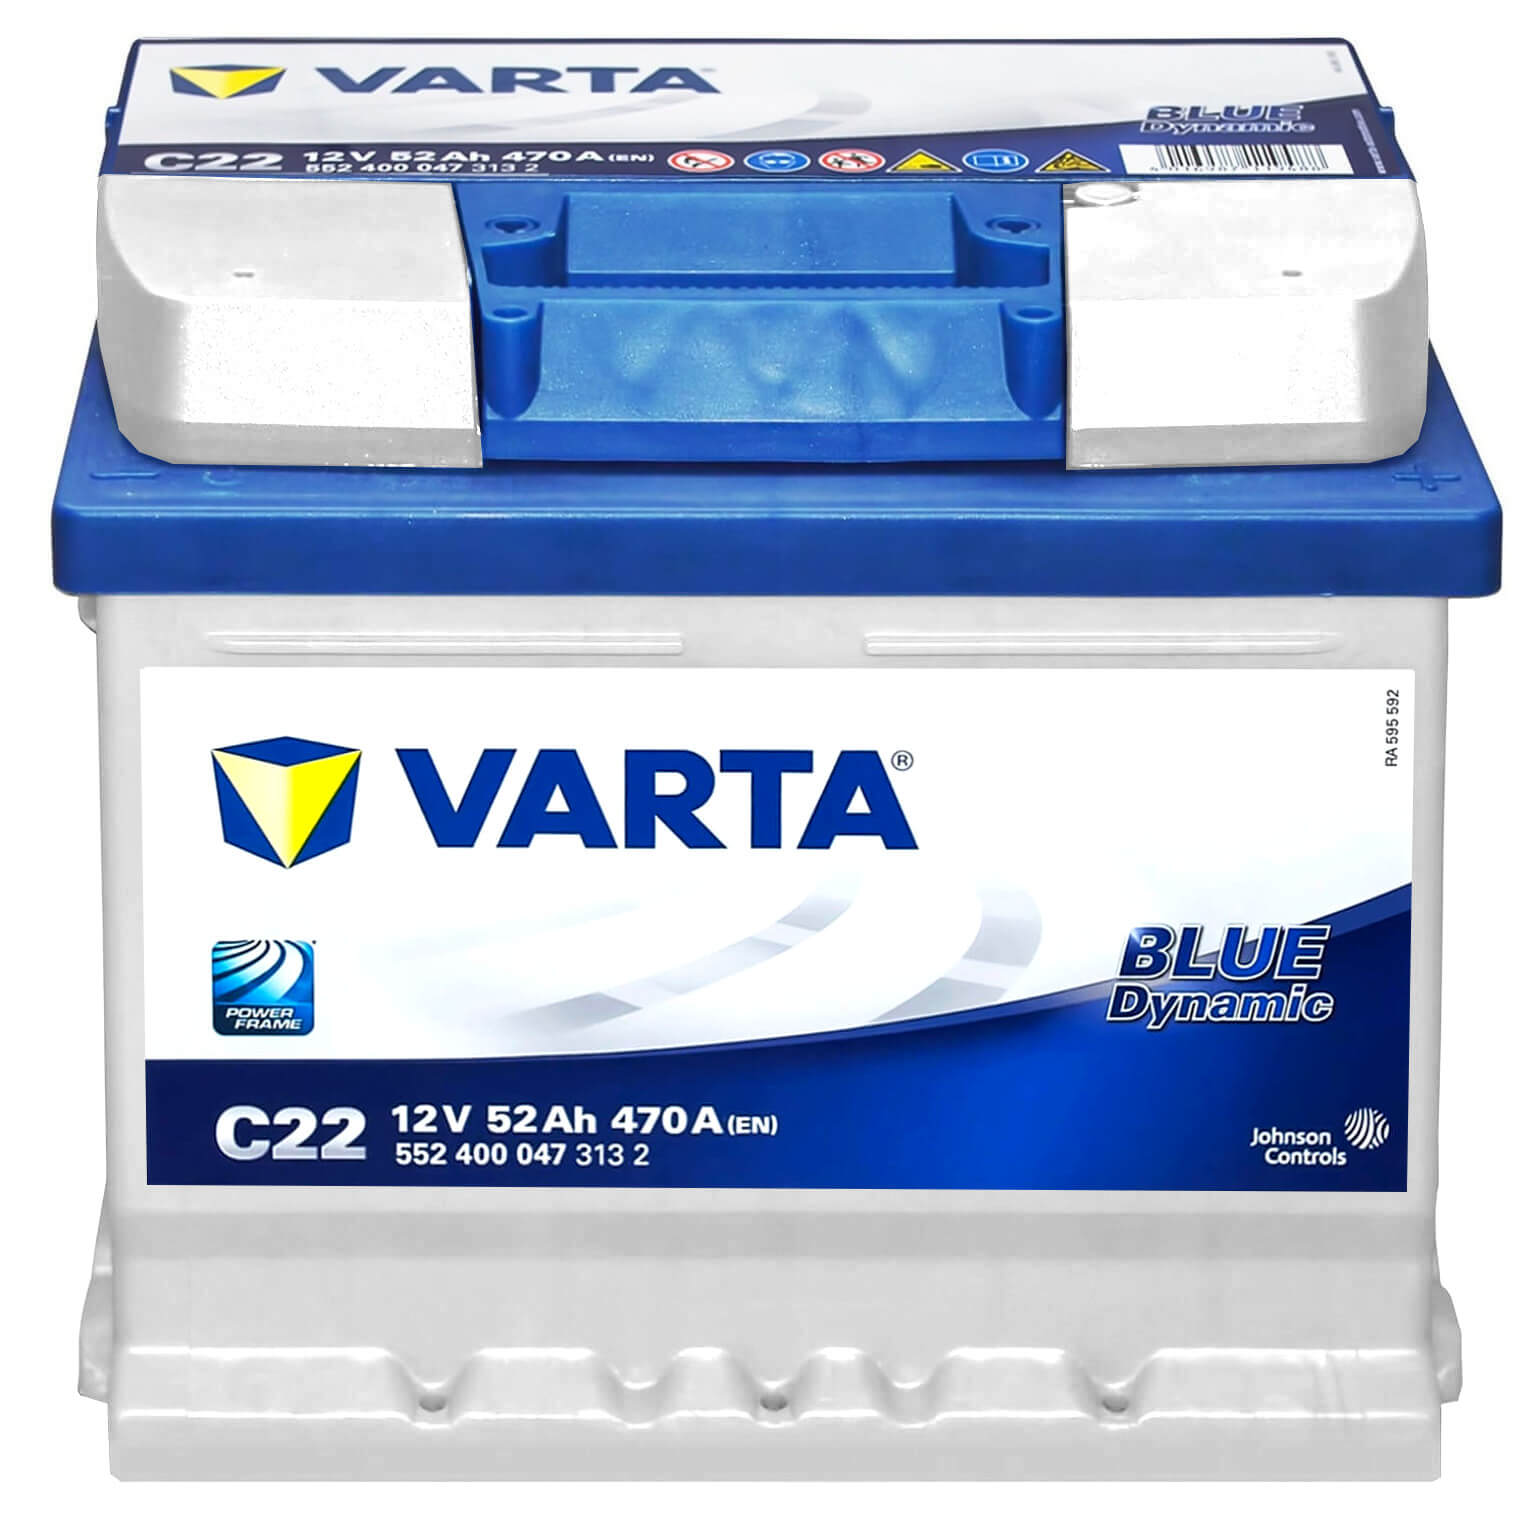 Autobatterie 12V 52Ah 470A Varta C22 Blue Dynamic 5524000473132